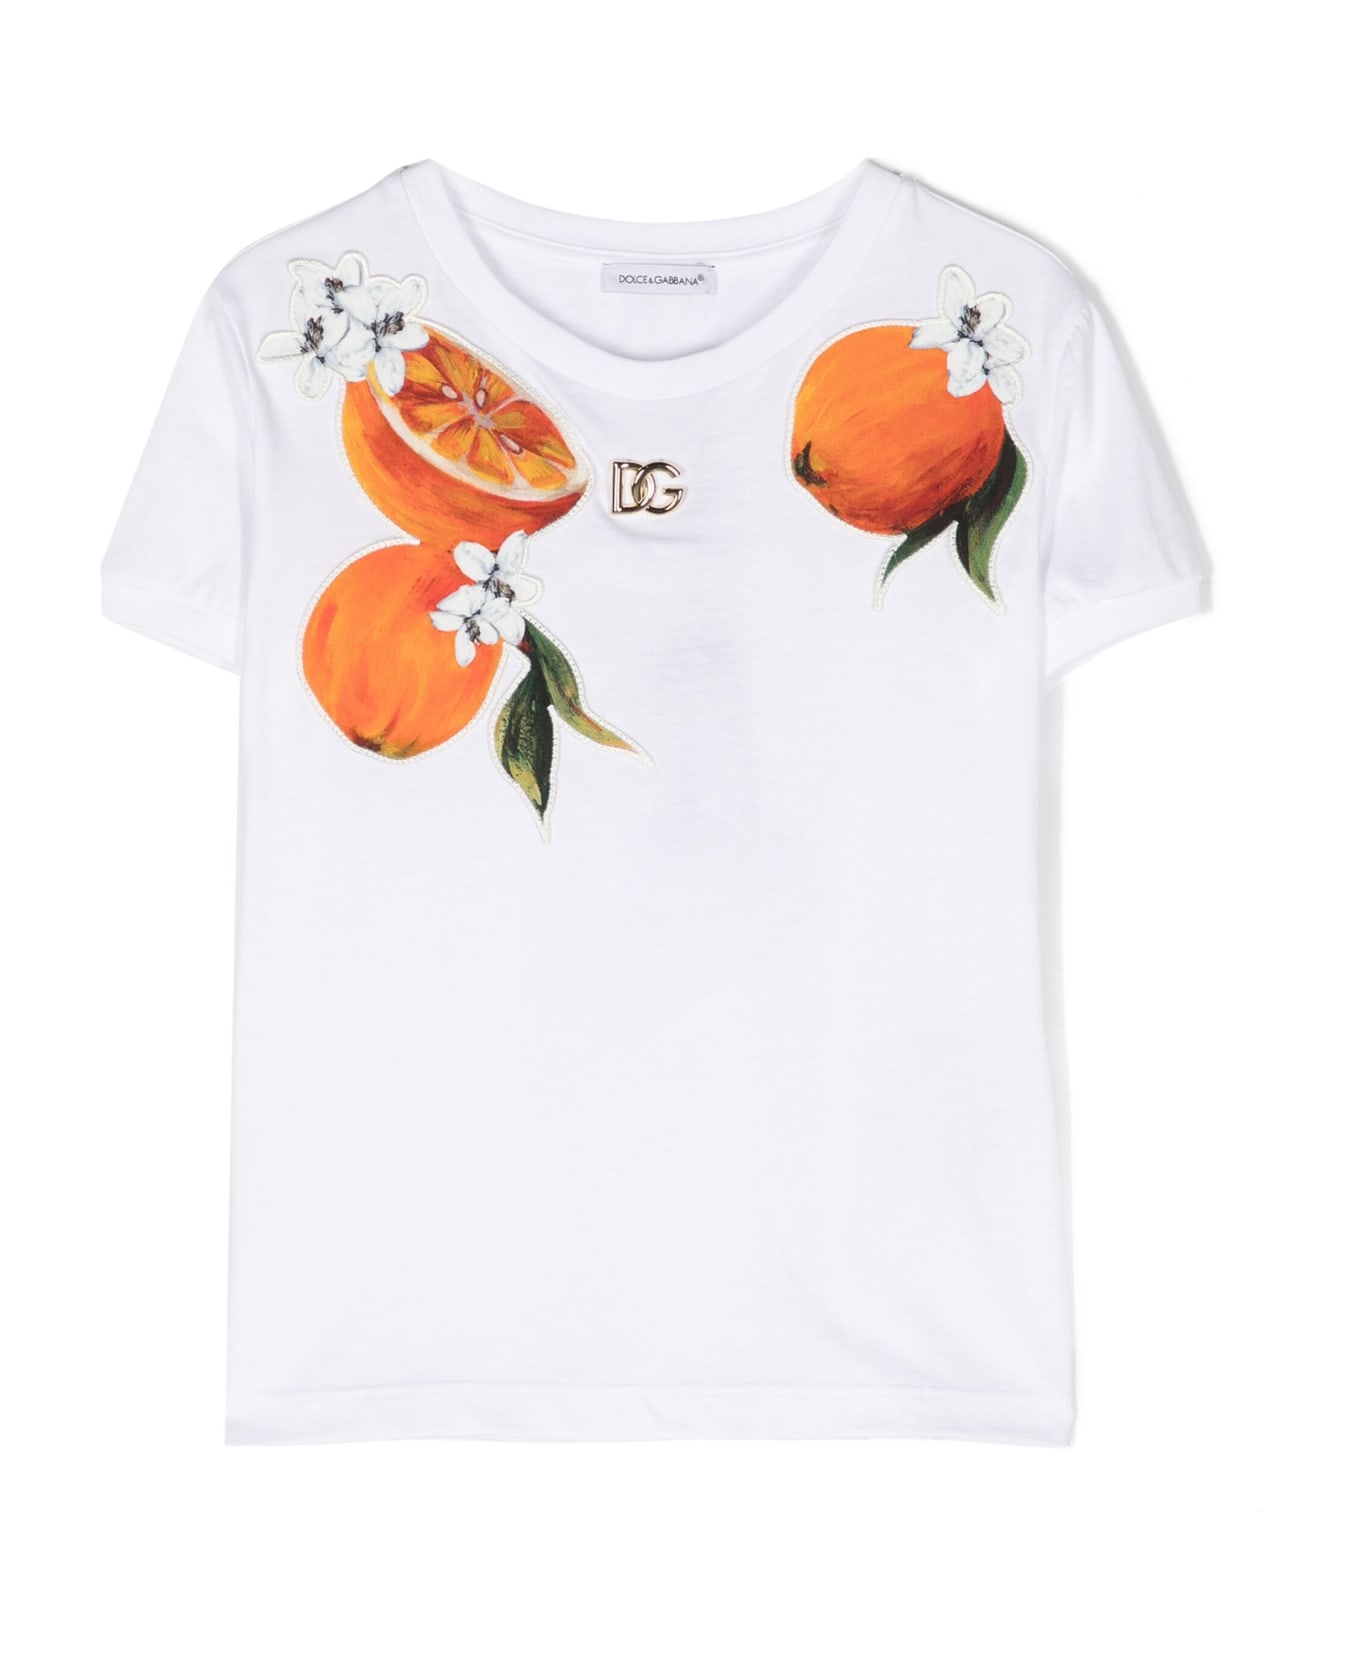 Dolce & Gabbana White T-shirt With Oranges Print - Bianco Ottico